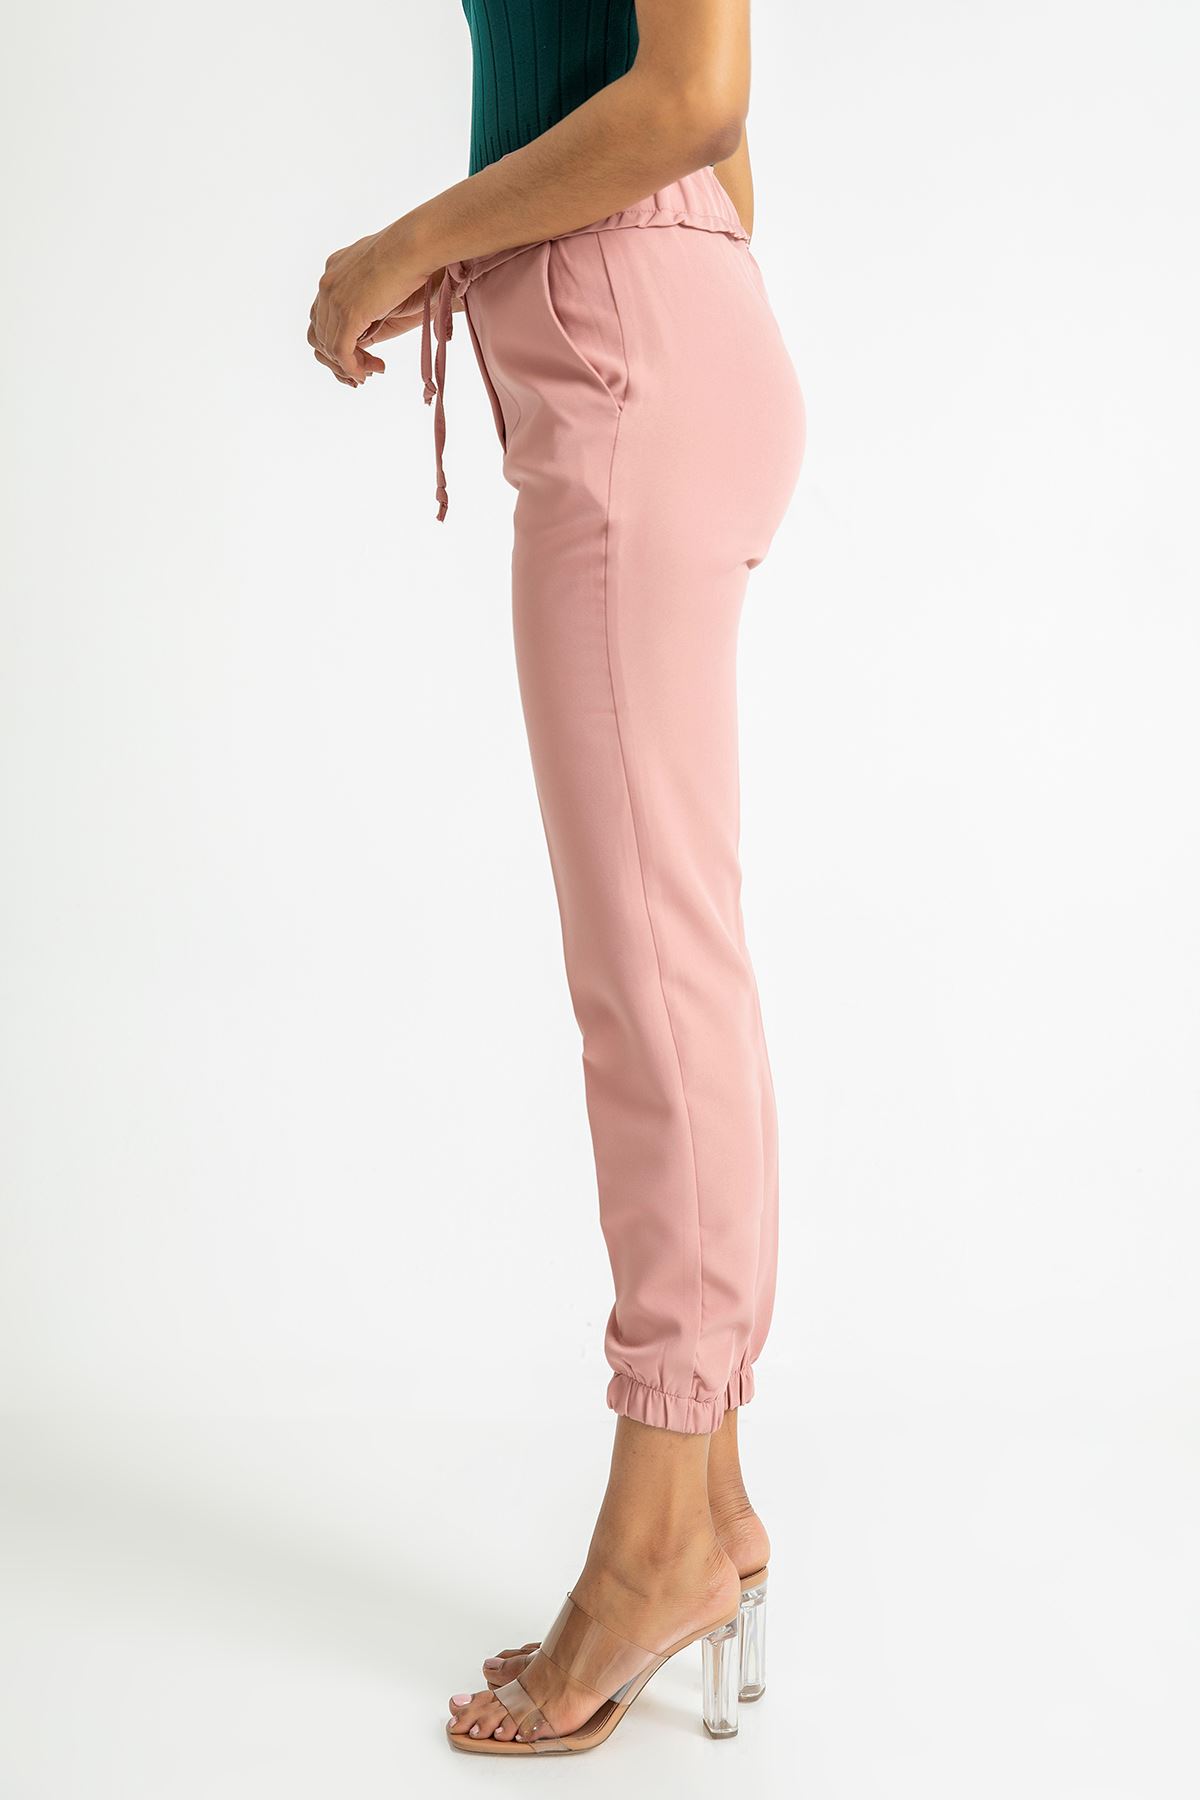 Atlas Fabric Ankle Length Elastic Waist Jogger Women'S Trouser - Light Pink